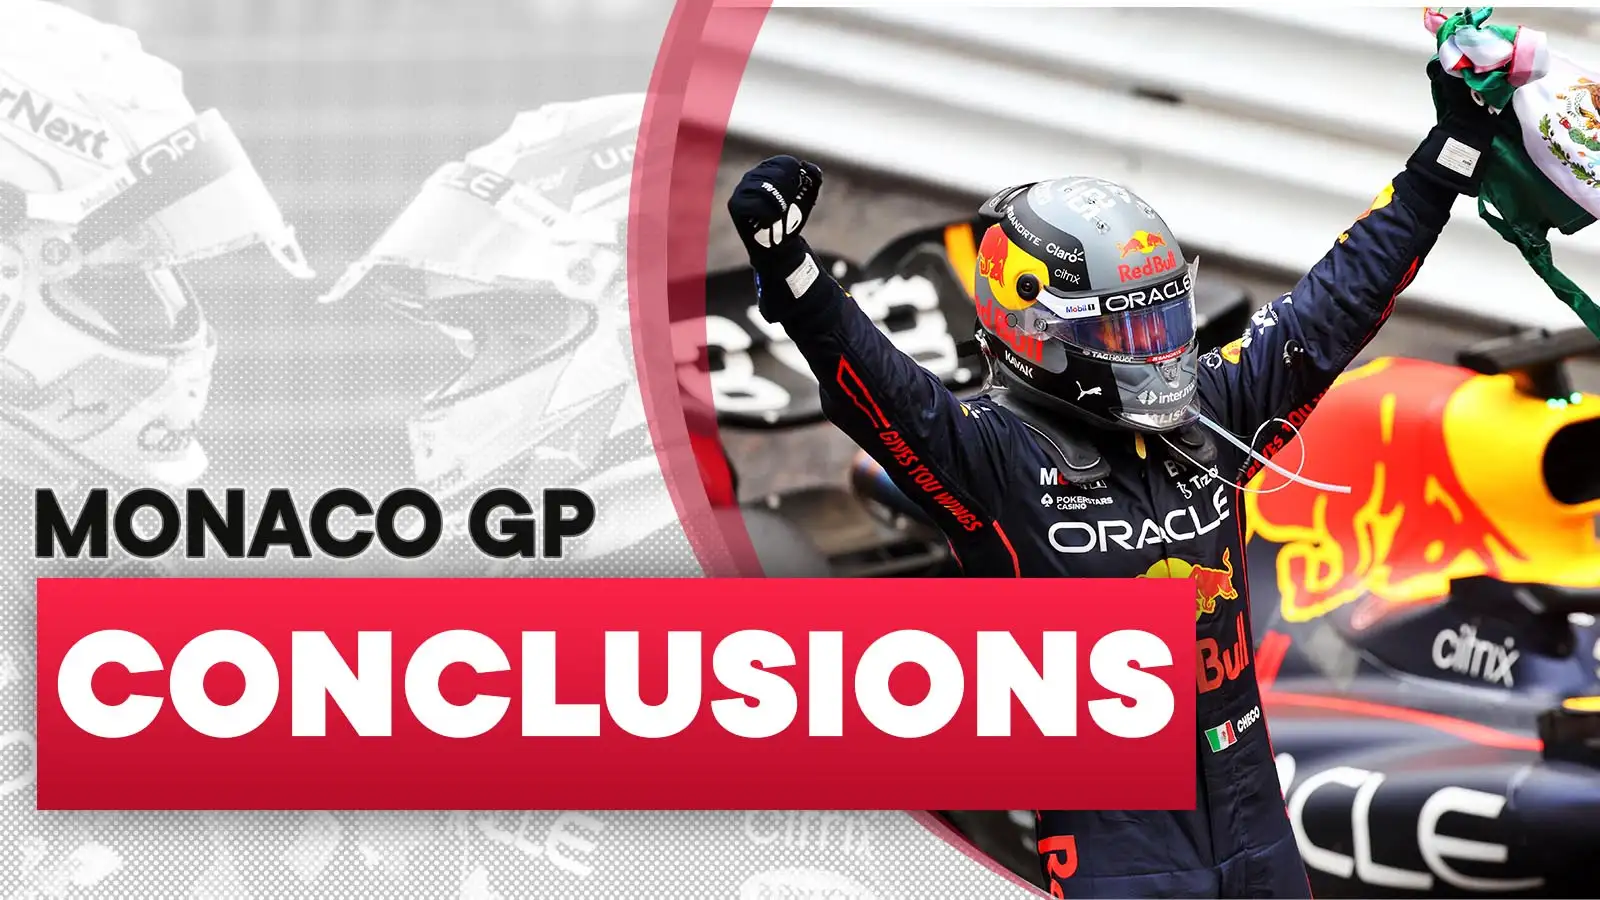 Monaco Grand Prix conclusions as Sergio Perez emerges victorious. 2022 Monaco